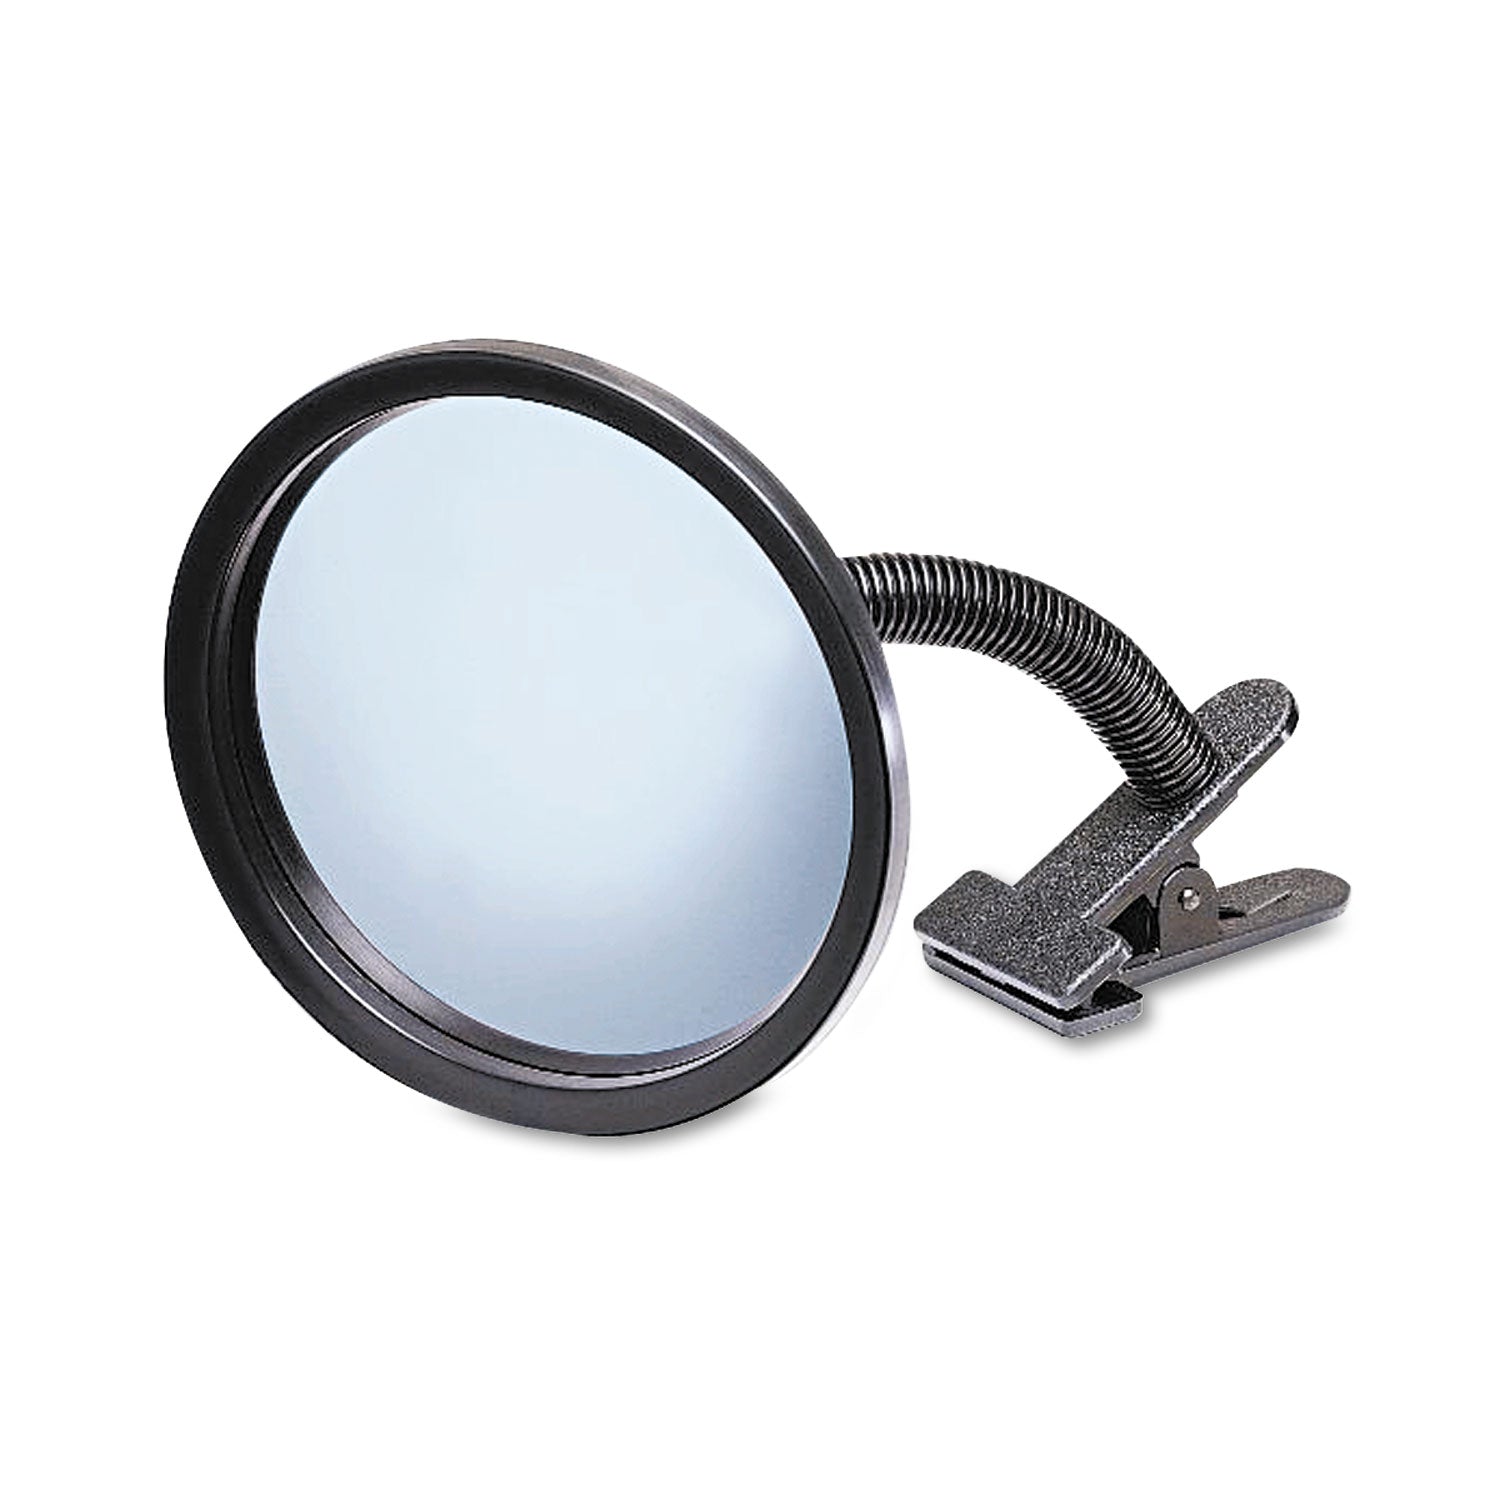 Portable Convex Security Mirror, 7" Diameter - 